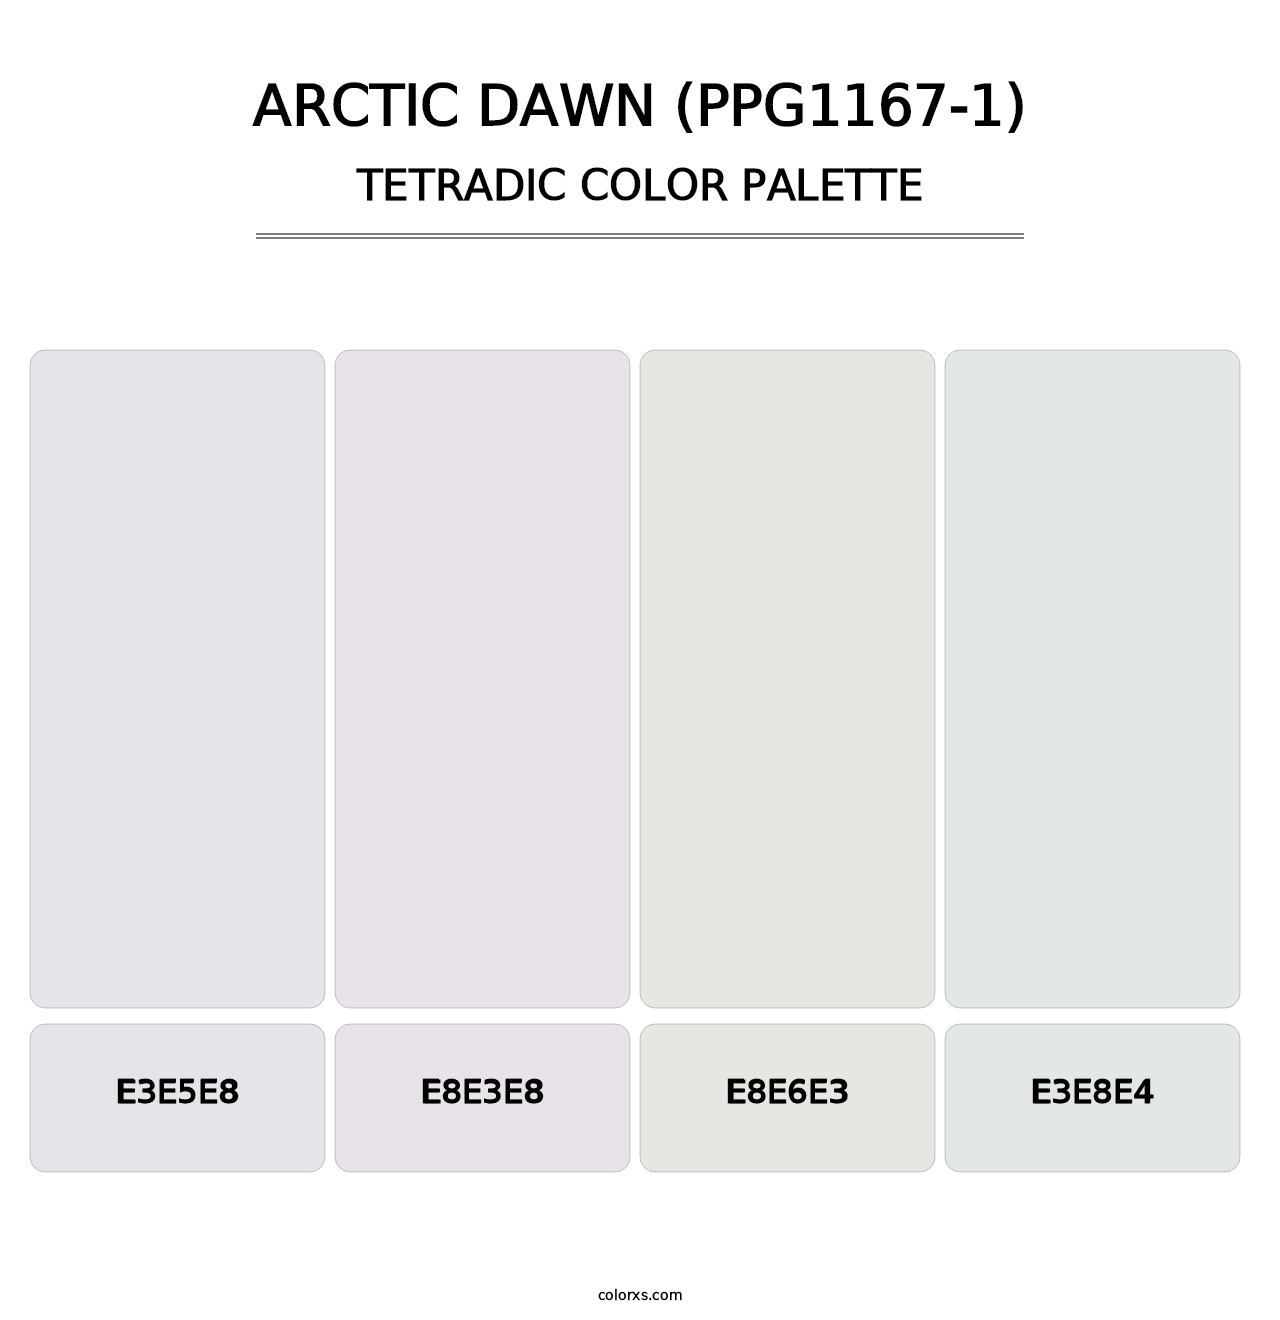 Arctic Dawn (PPG1167-1) - Tetradic Color Palette